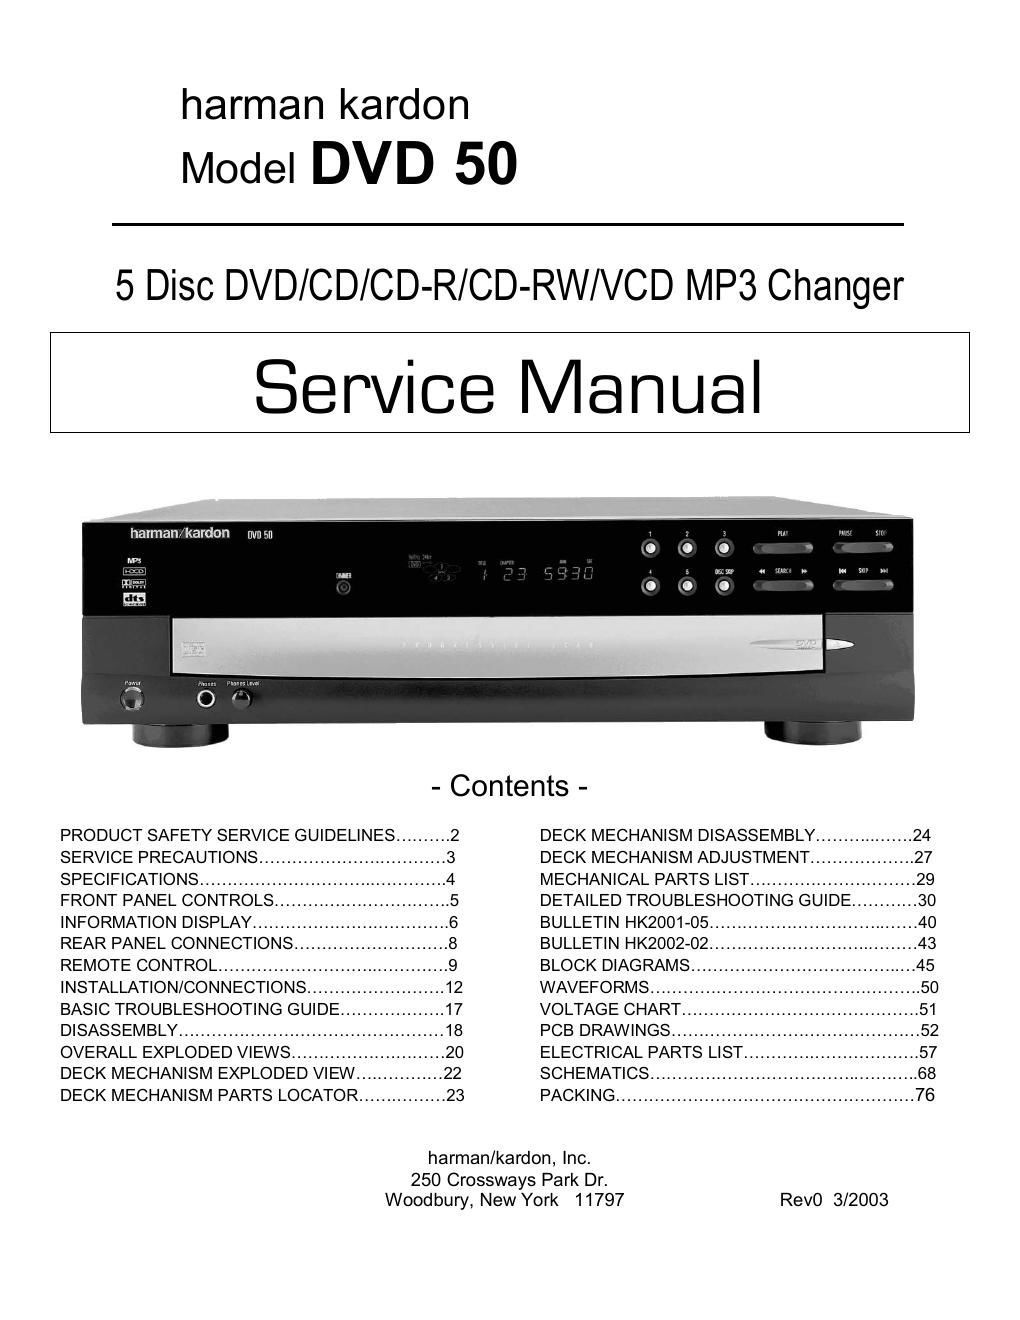 harman kardon dvd 50 service manual